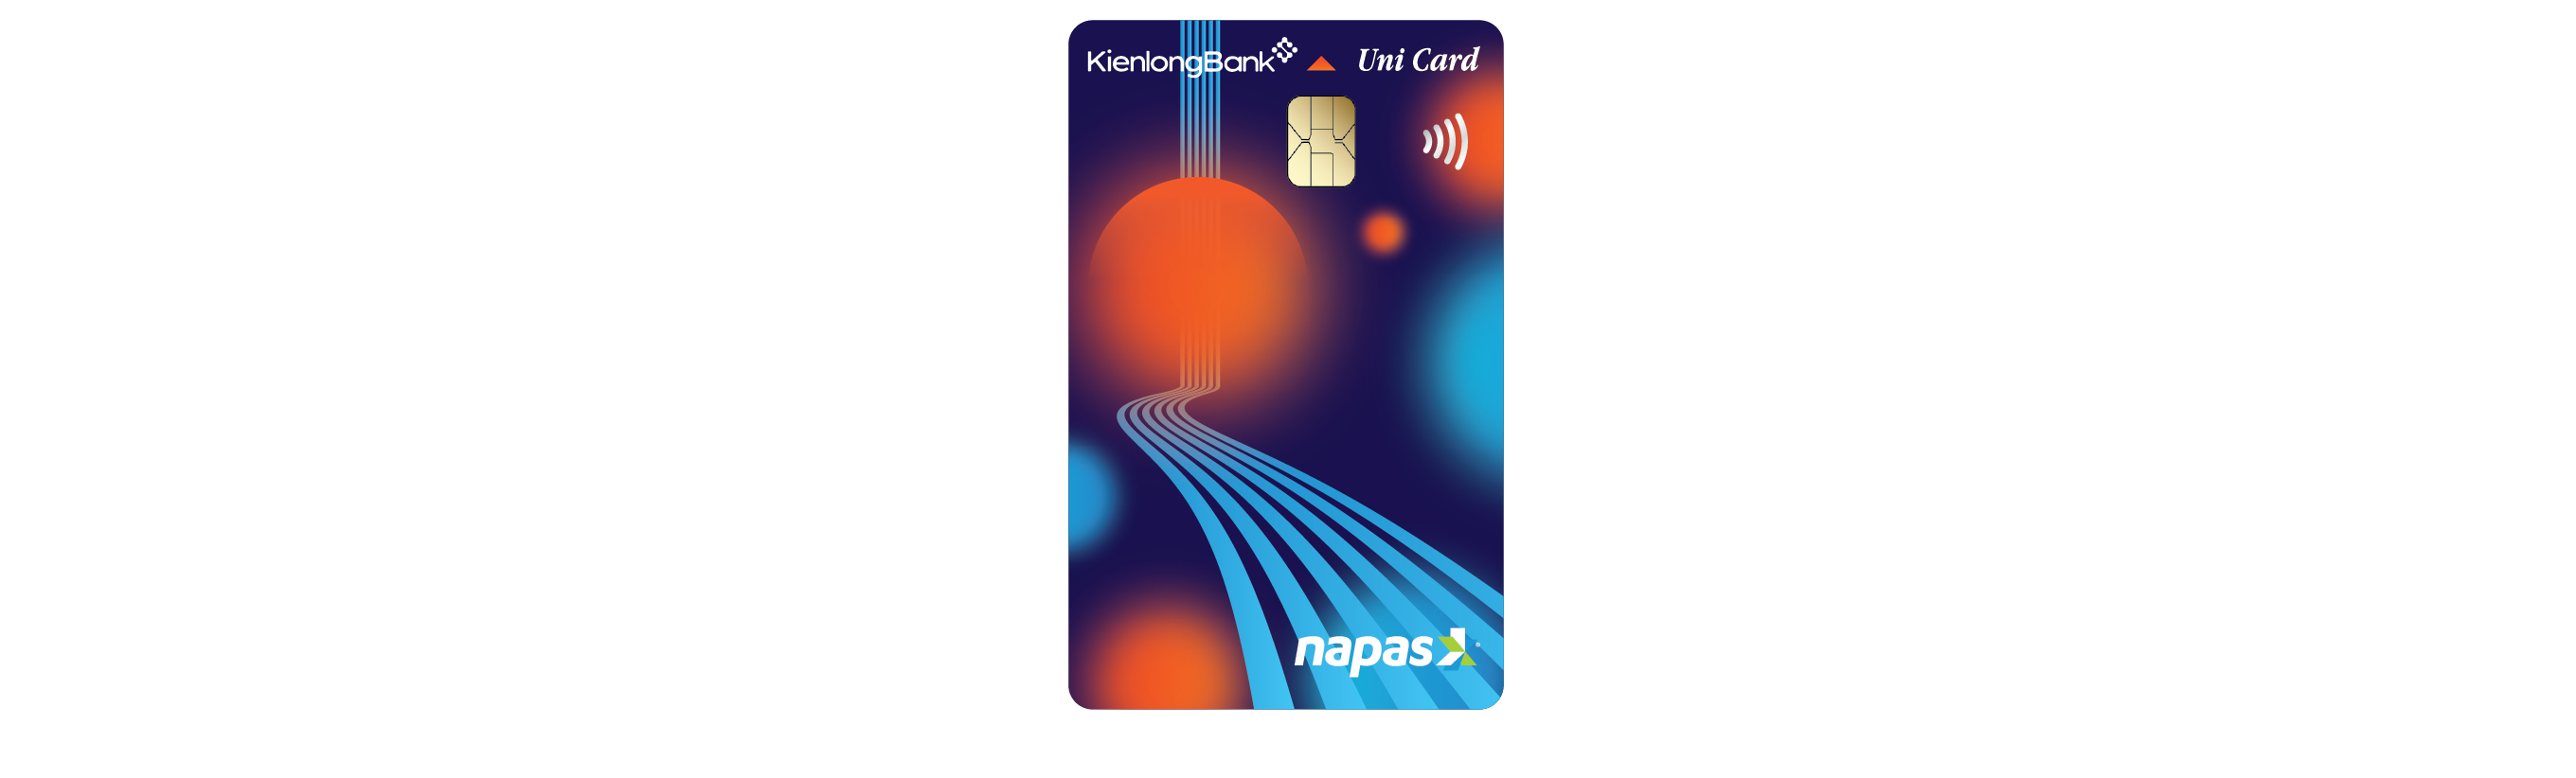 Thẻ ghi nợ nội địa KienlongBank Uni Card